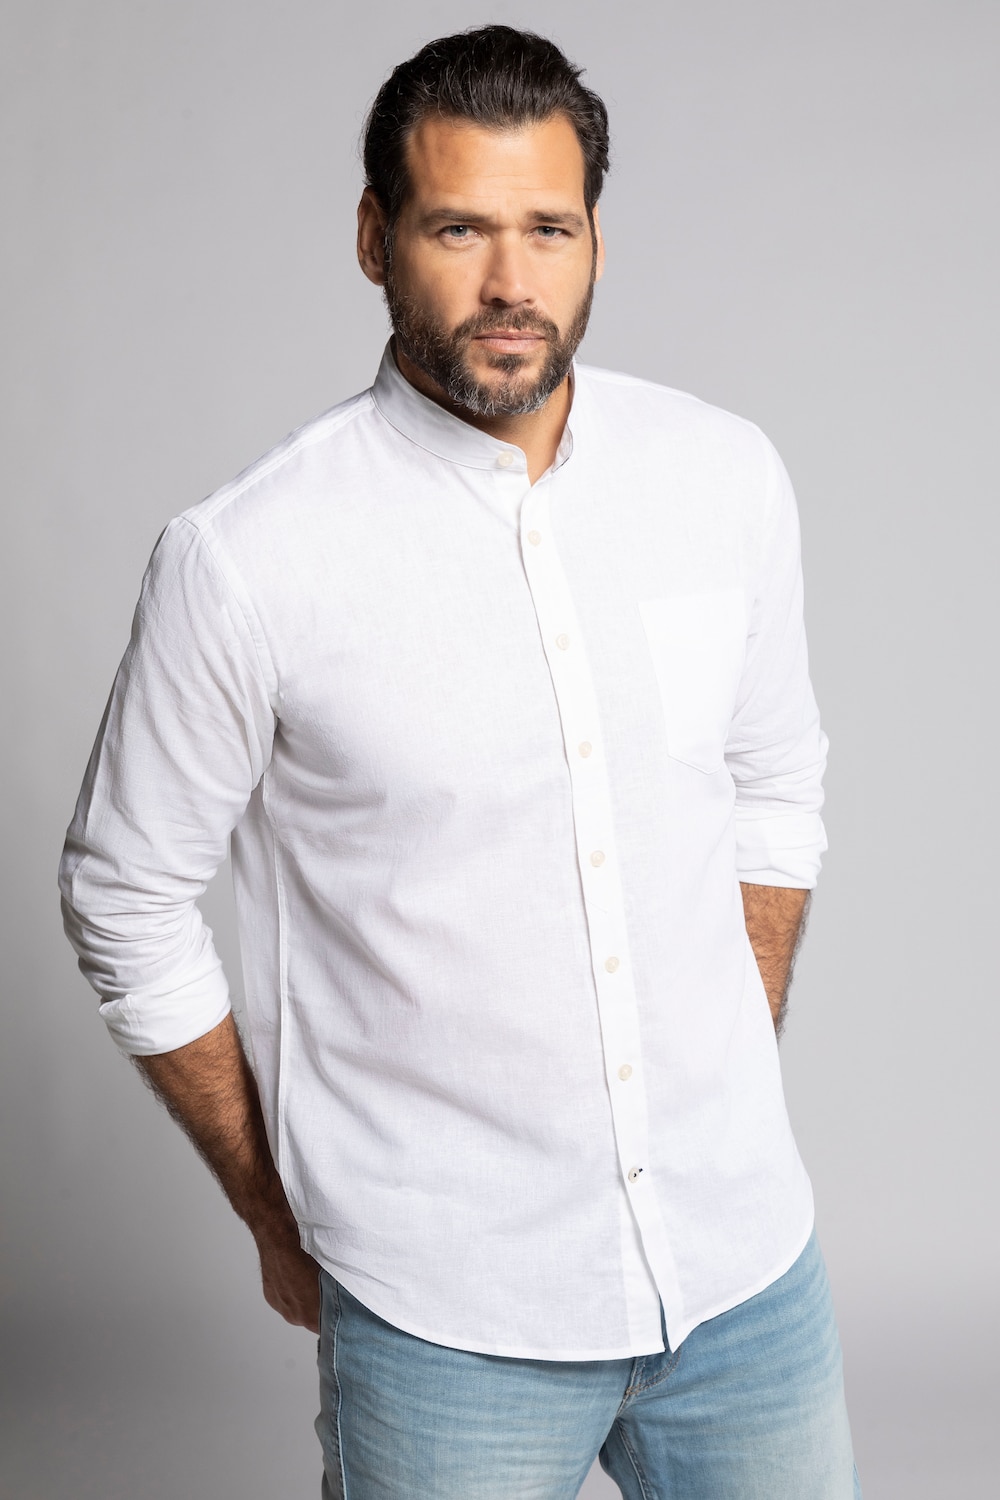 Plus Size Long Sleeve Linen Blend Shirt, Man, white, size: 3XL, linen/cotton, JP1880